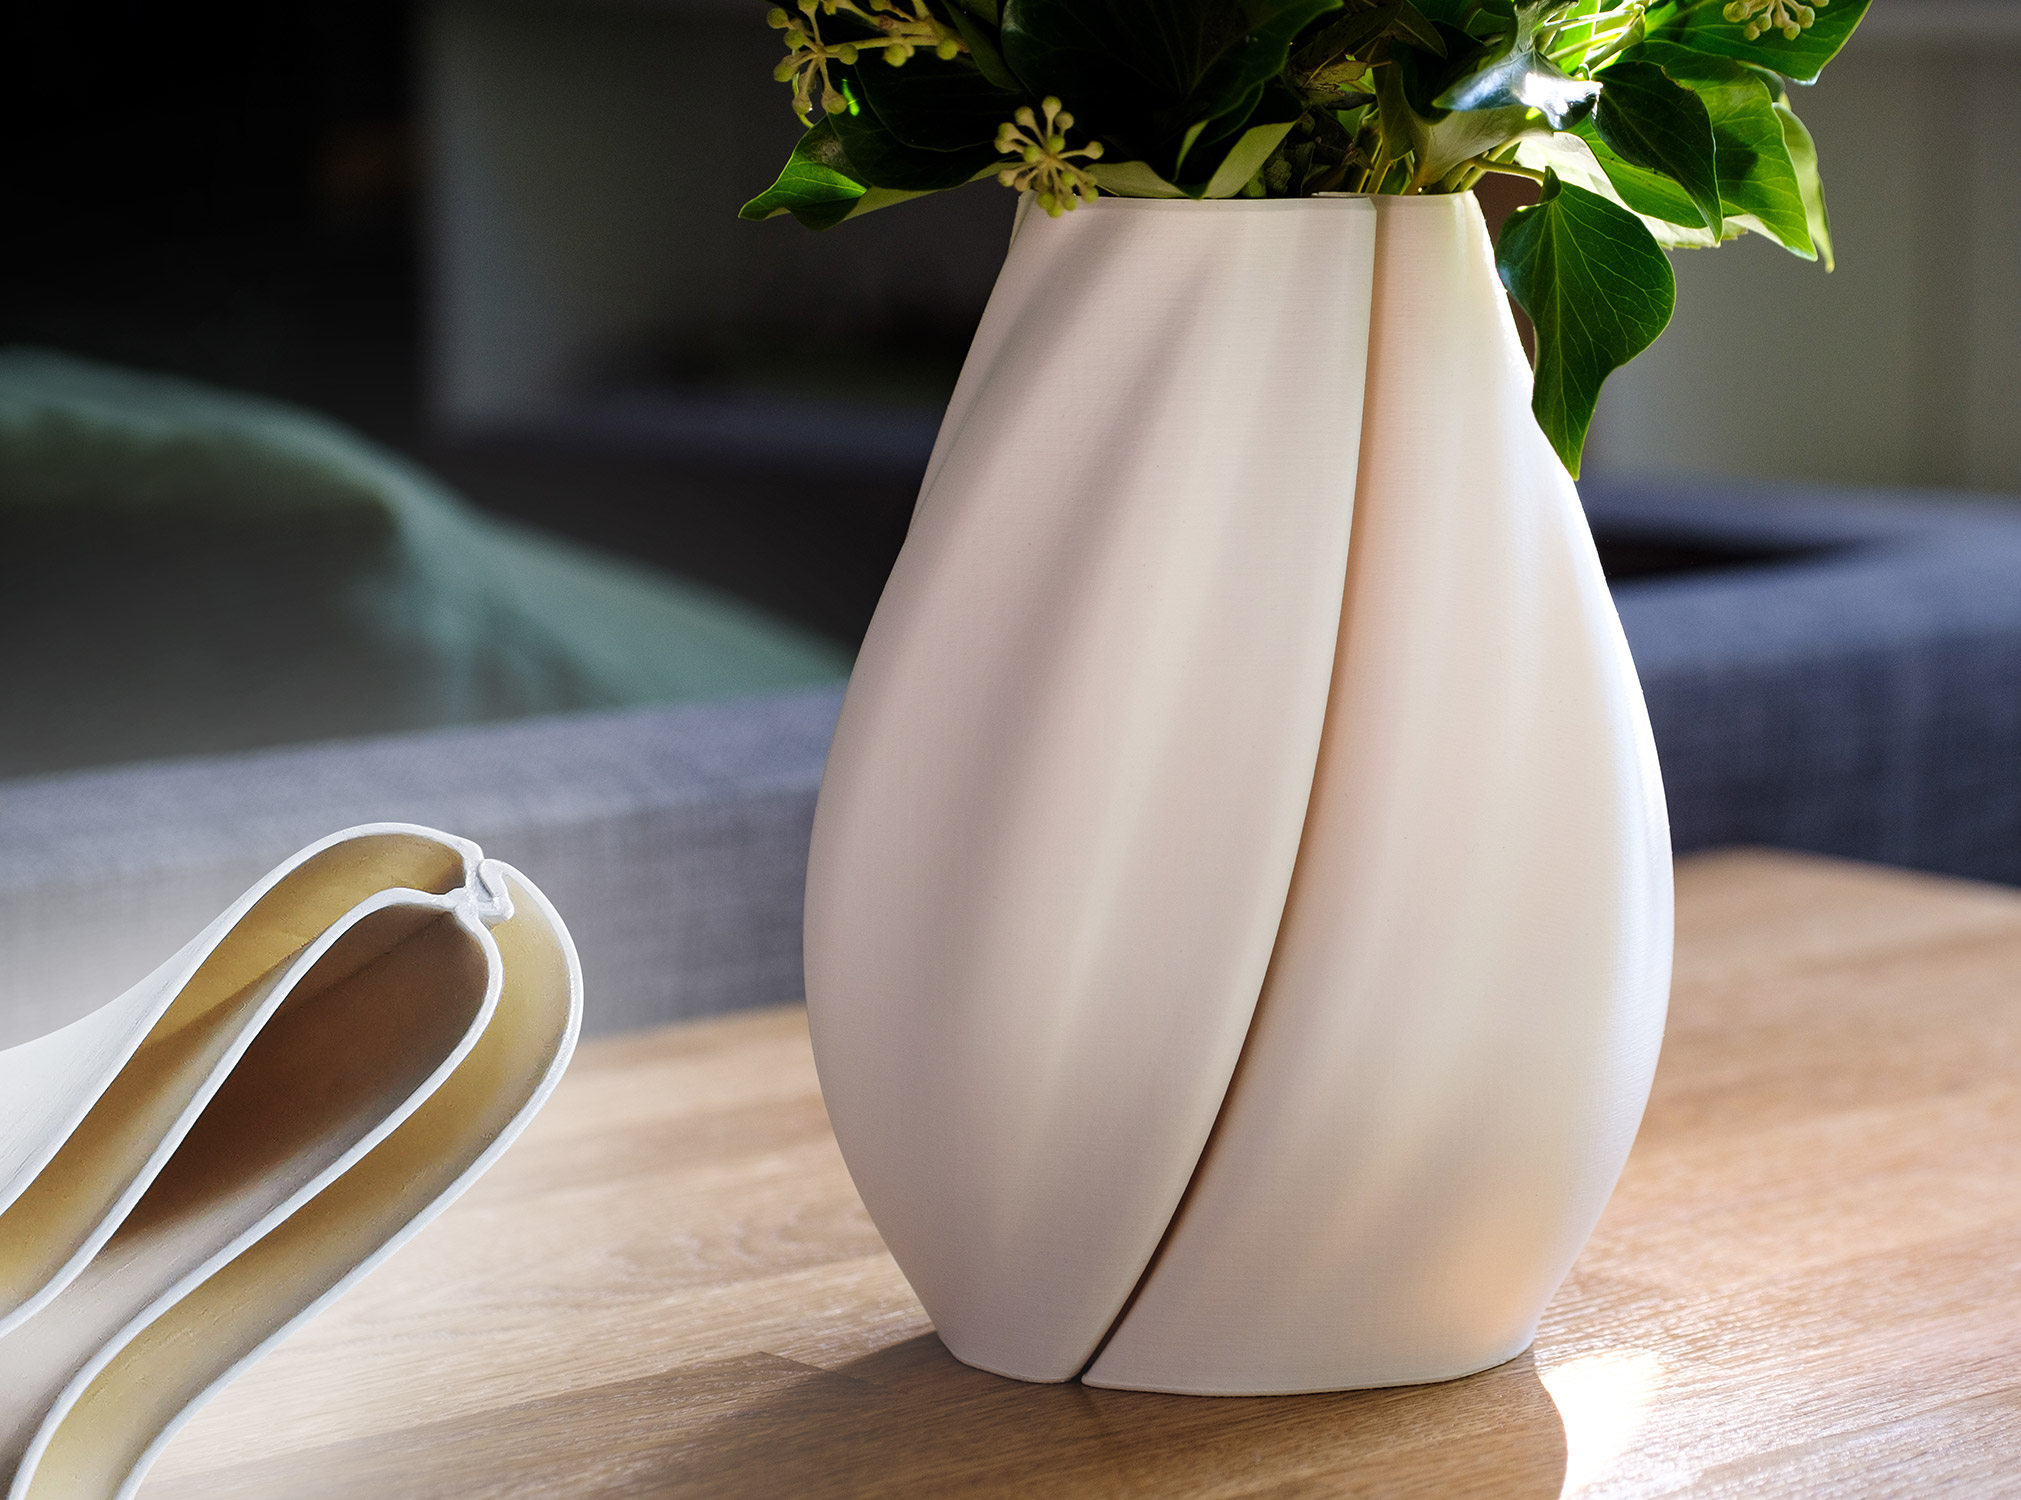 Silky Crease Vase - featuring a dual wall vase mode design